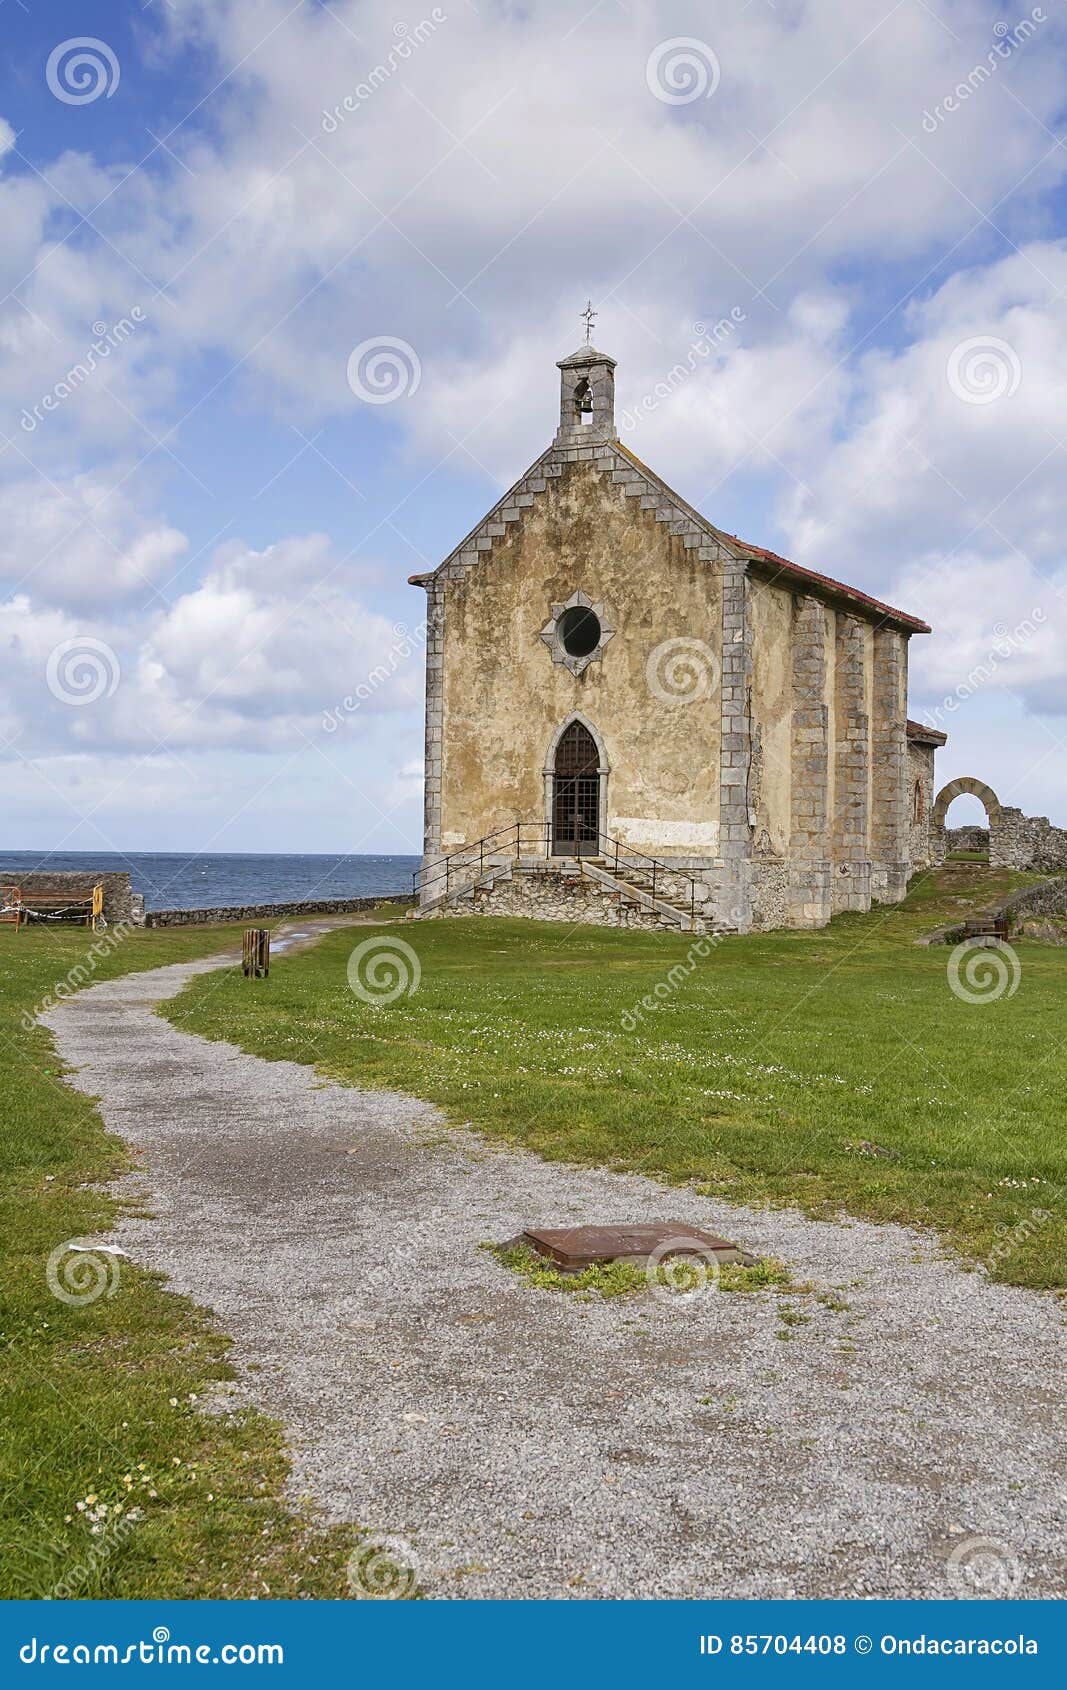 coastal church